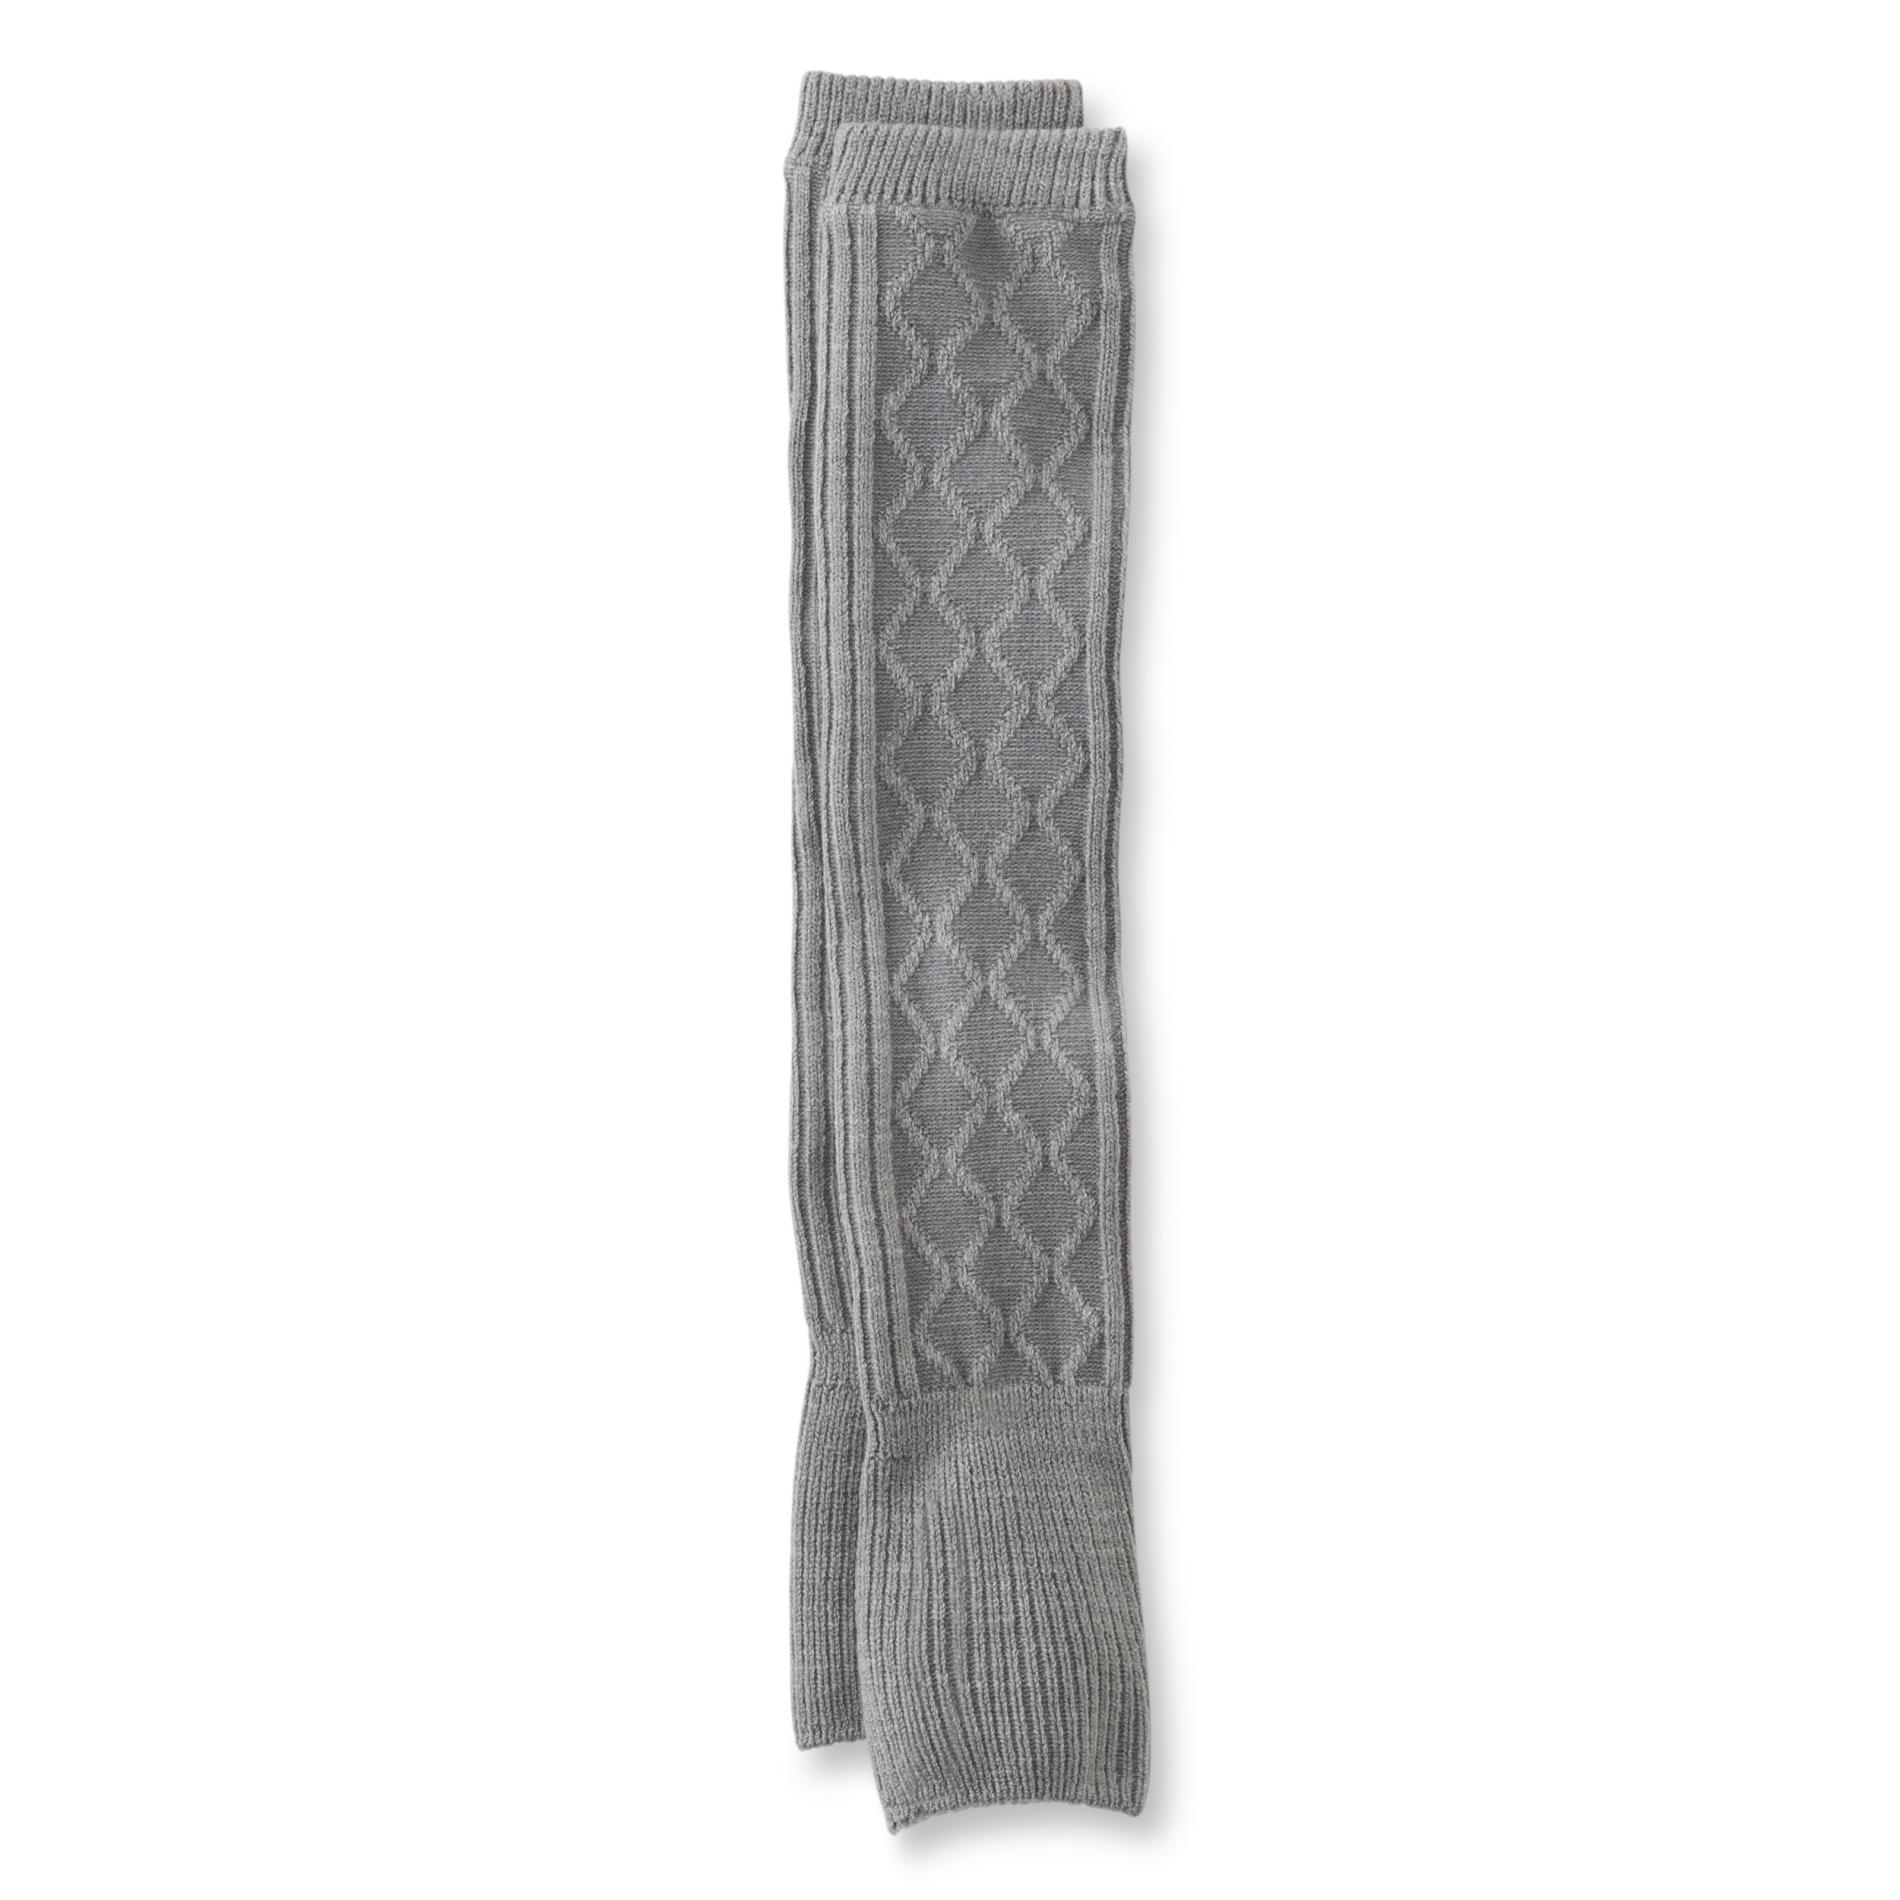 Studio S Women's Cable Knit Leg Warmers